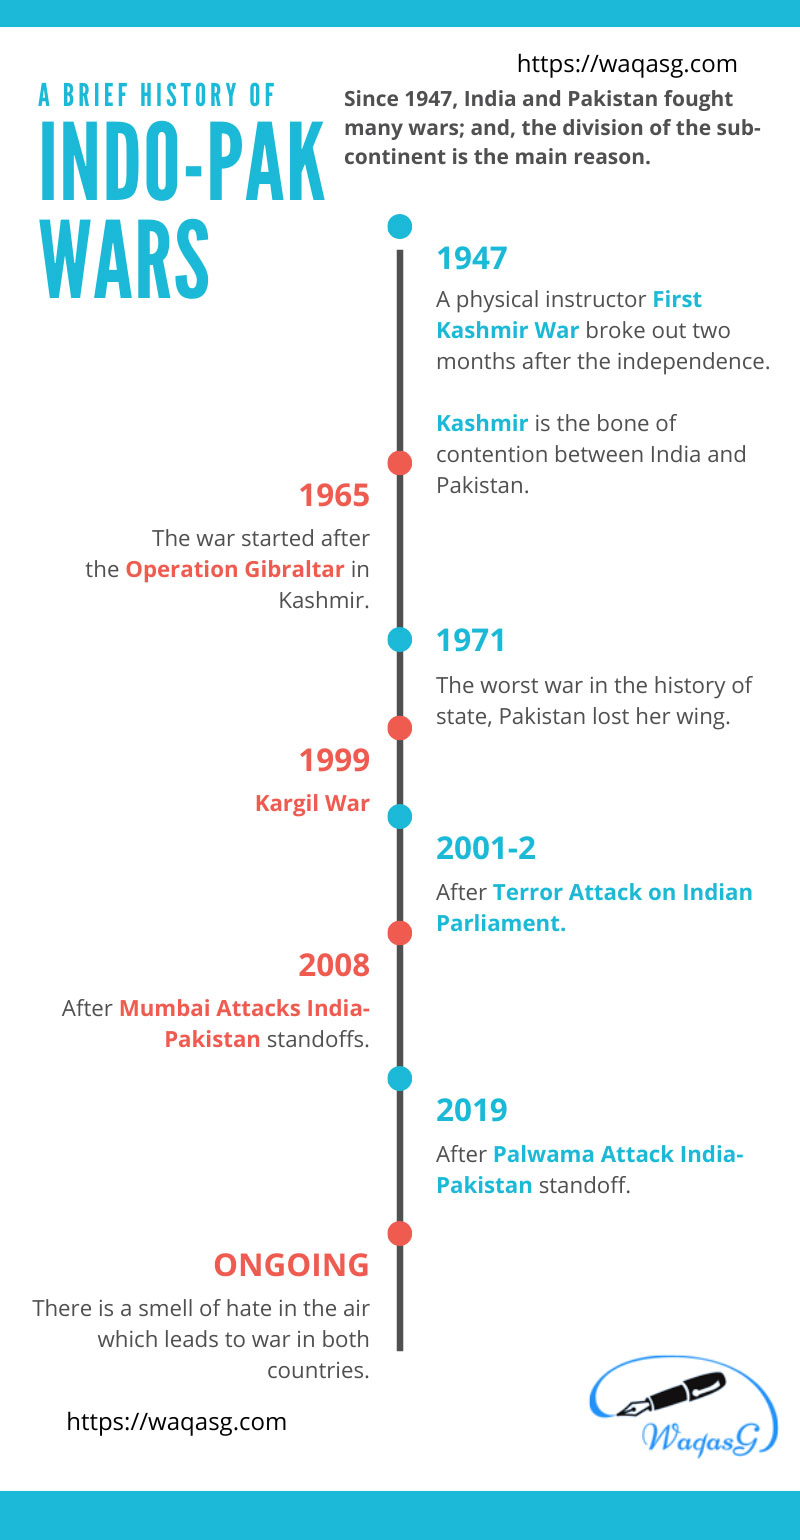 India-Pakistan Wars Timeline